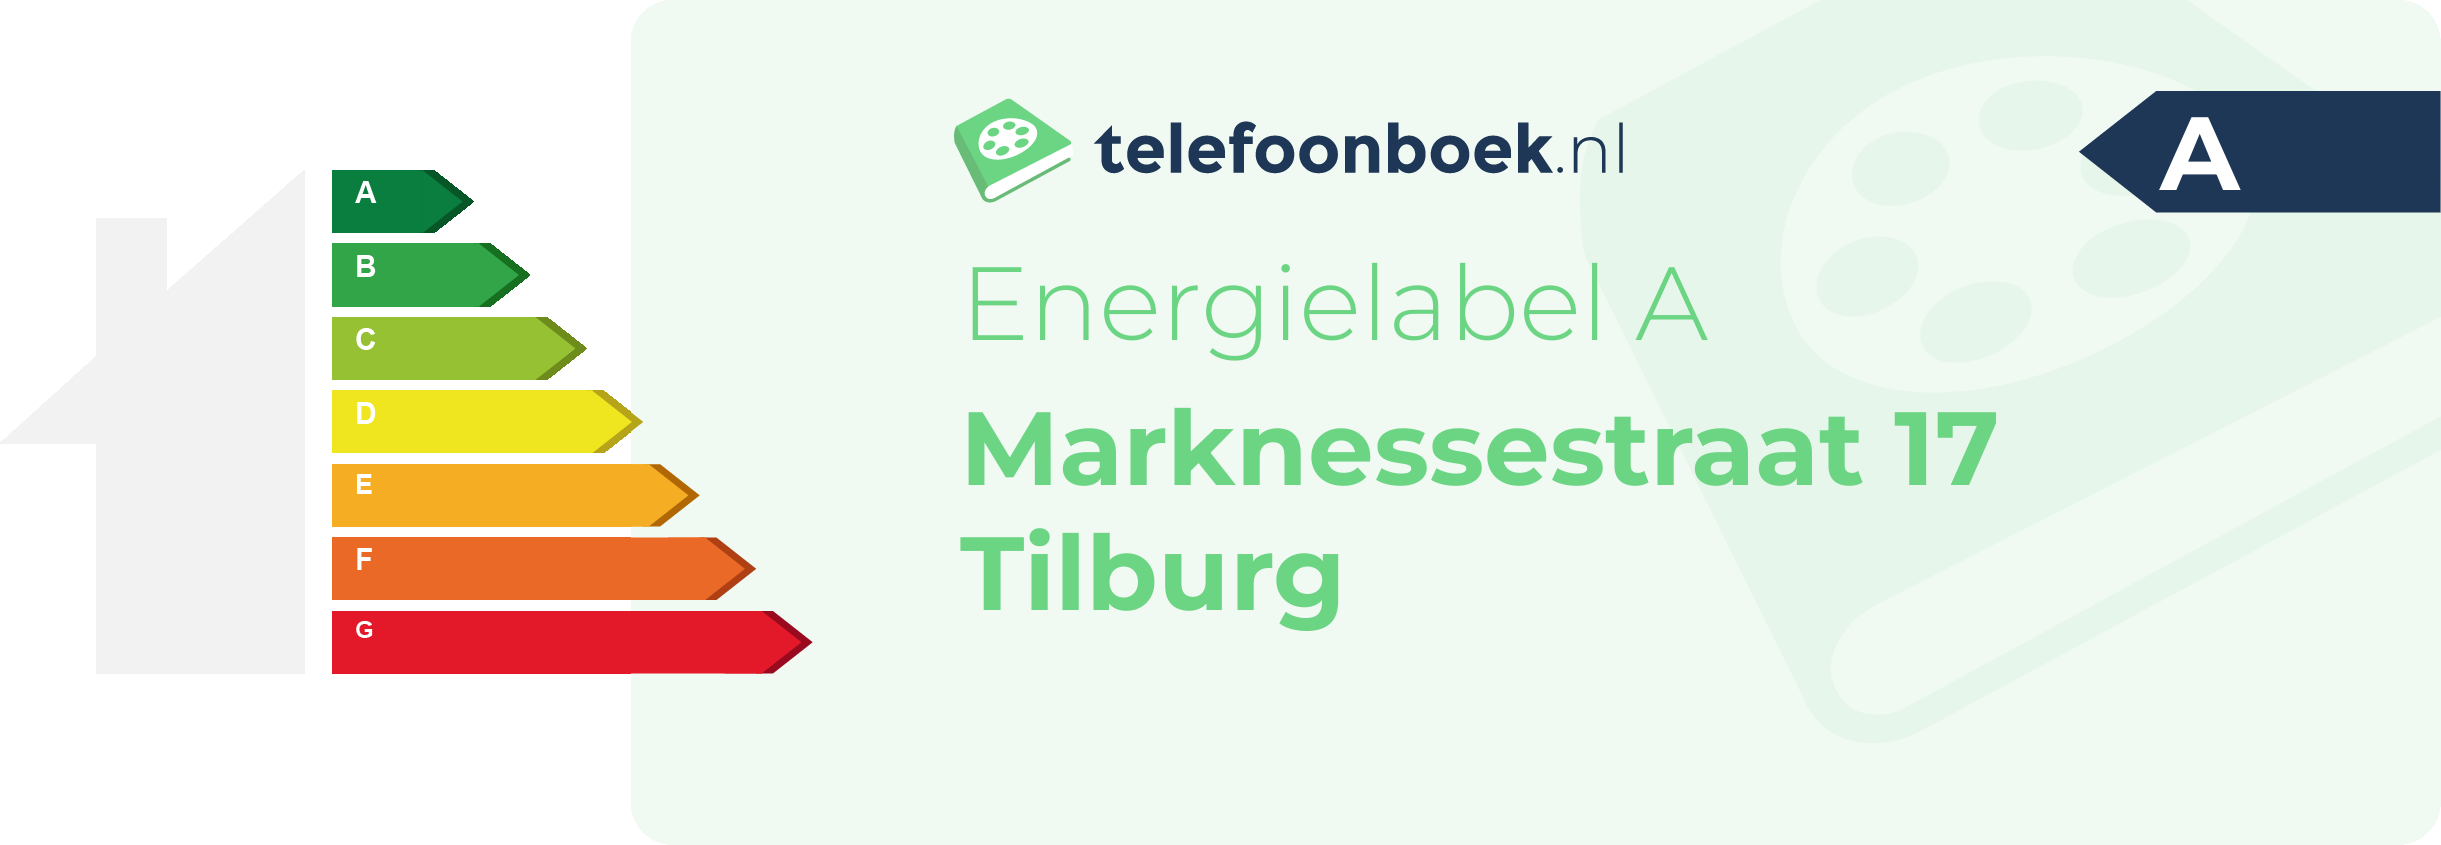 Energielabel Marknessestraat 17 Tilburg